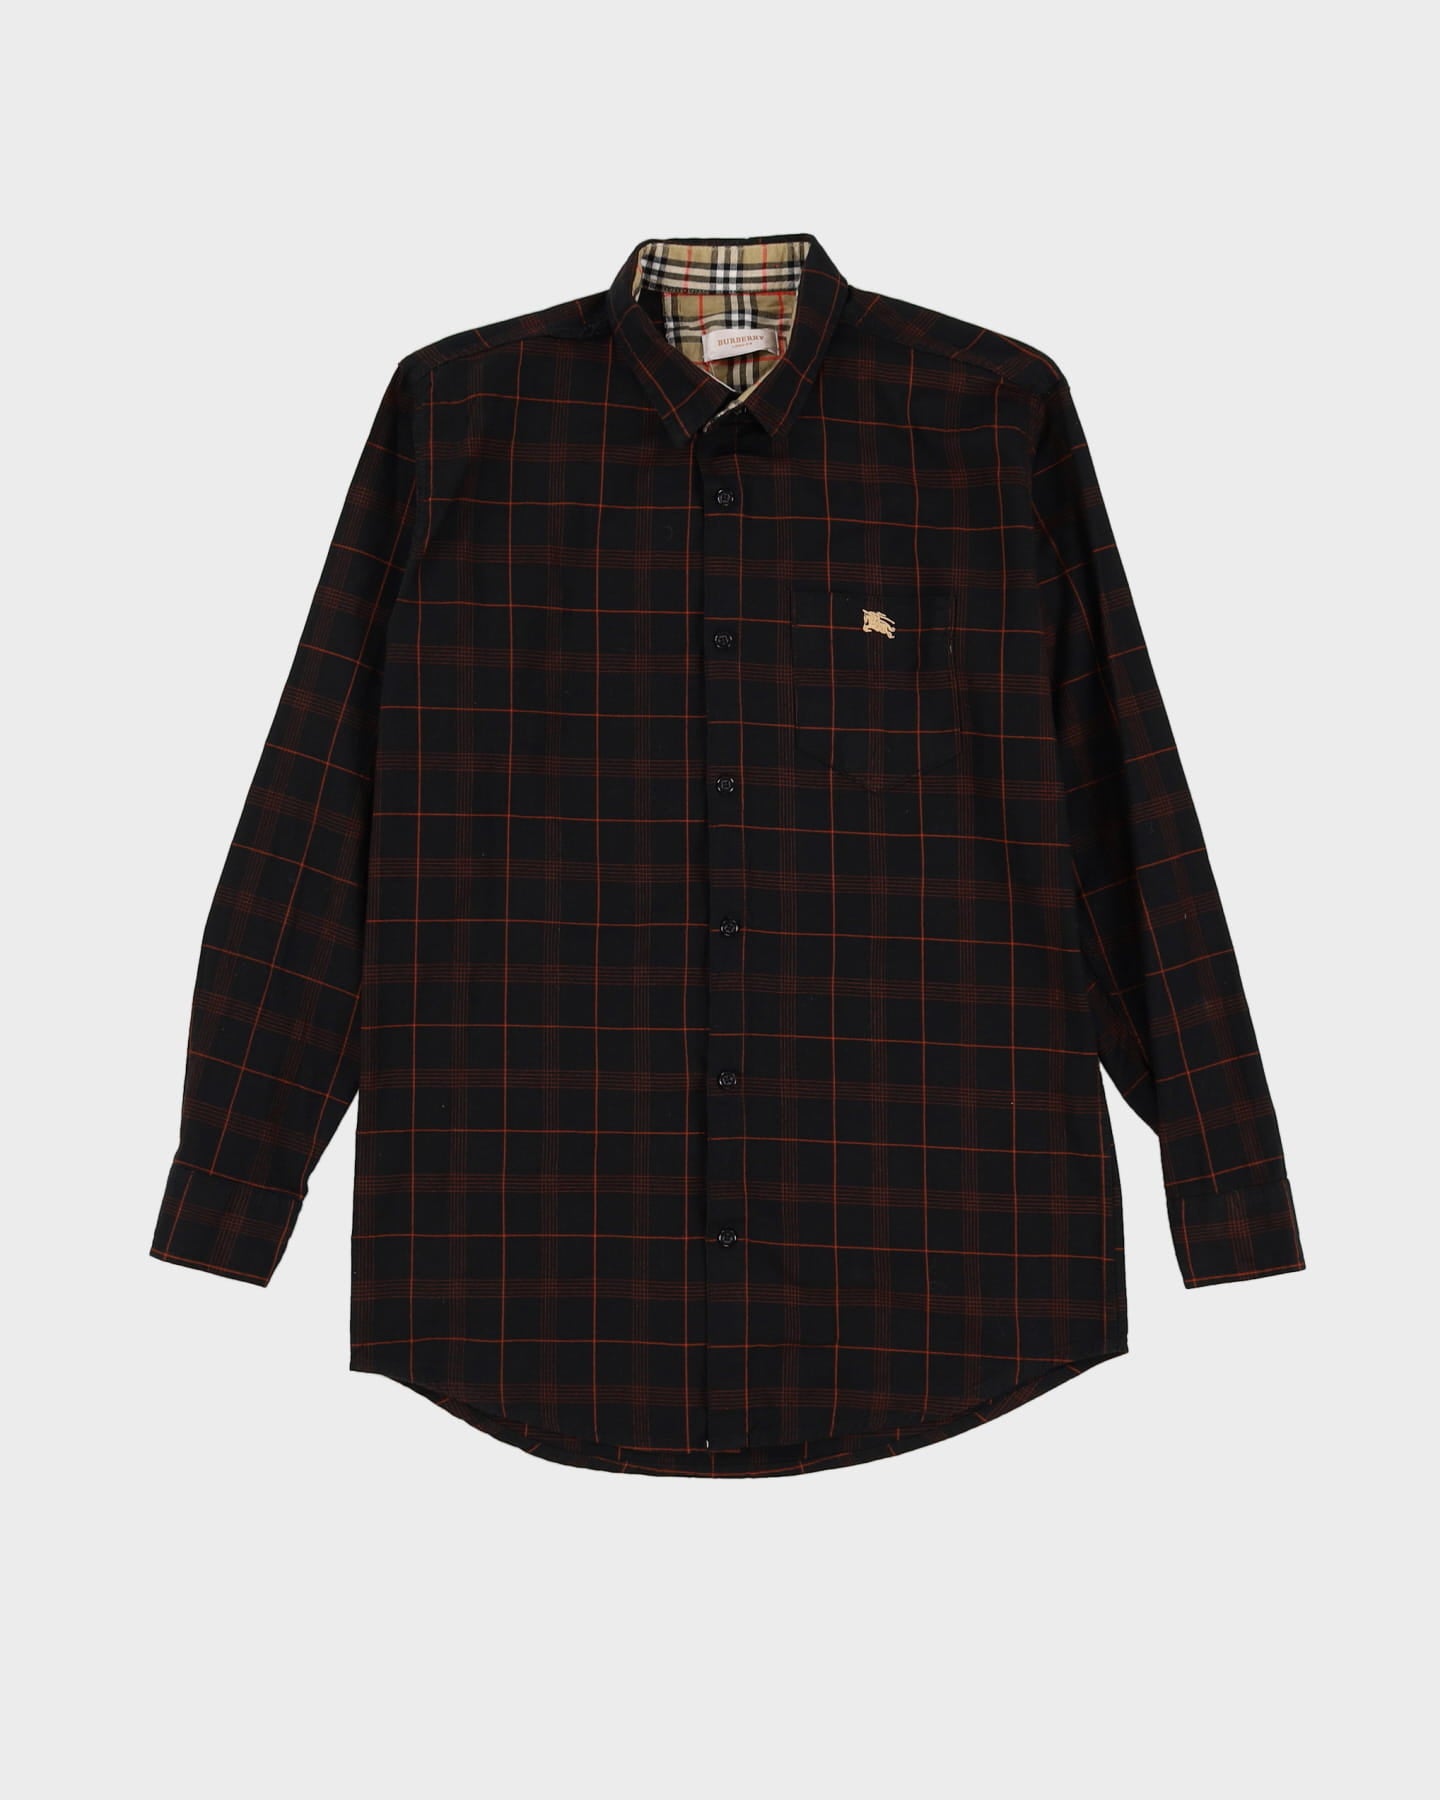 Burberry Black / Red Check Shirt - M